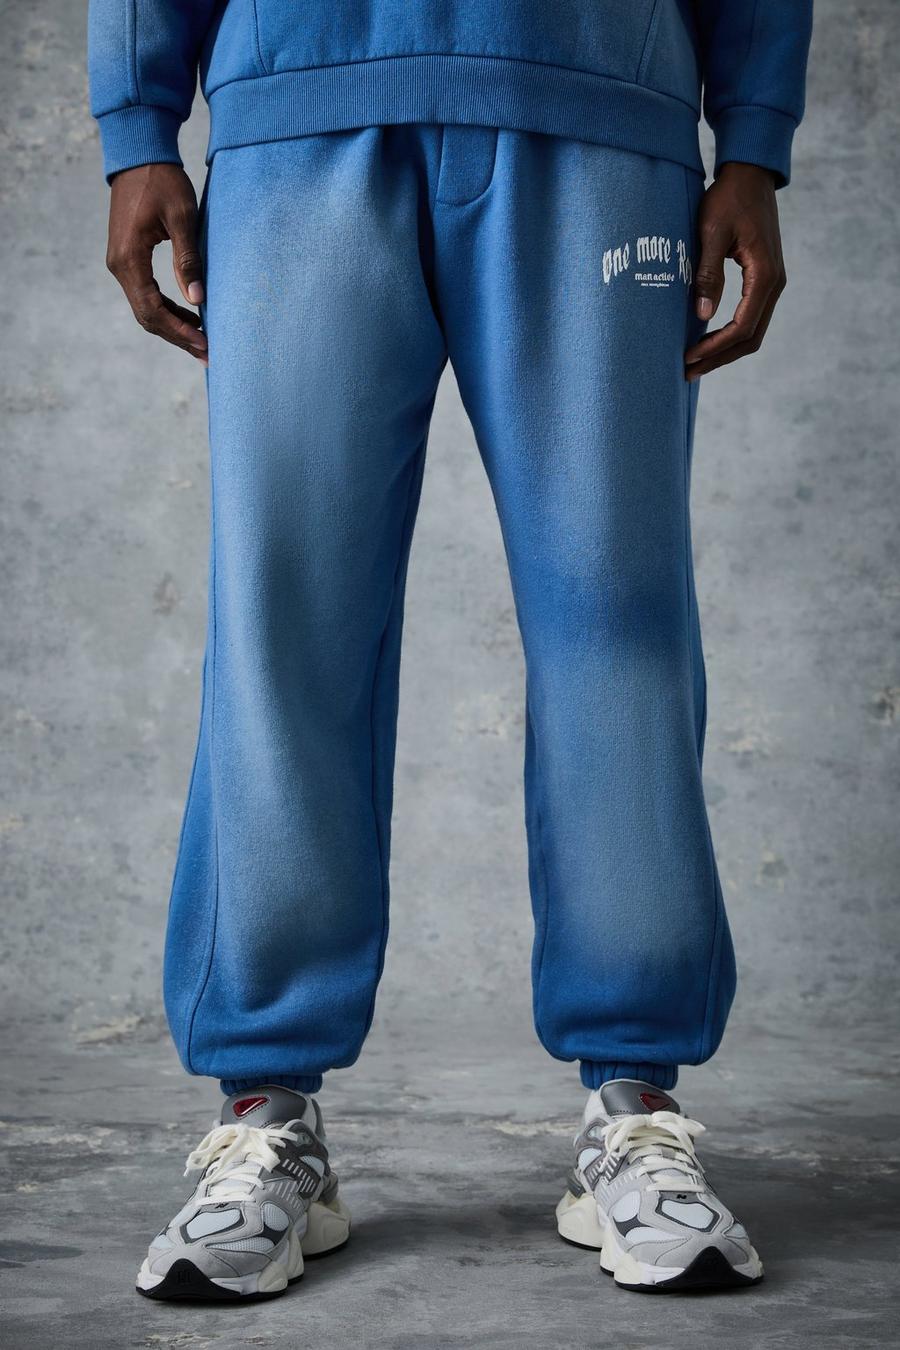 Pantaloni tuta Man Active vintage in slavato One More Rep, Blue